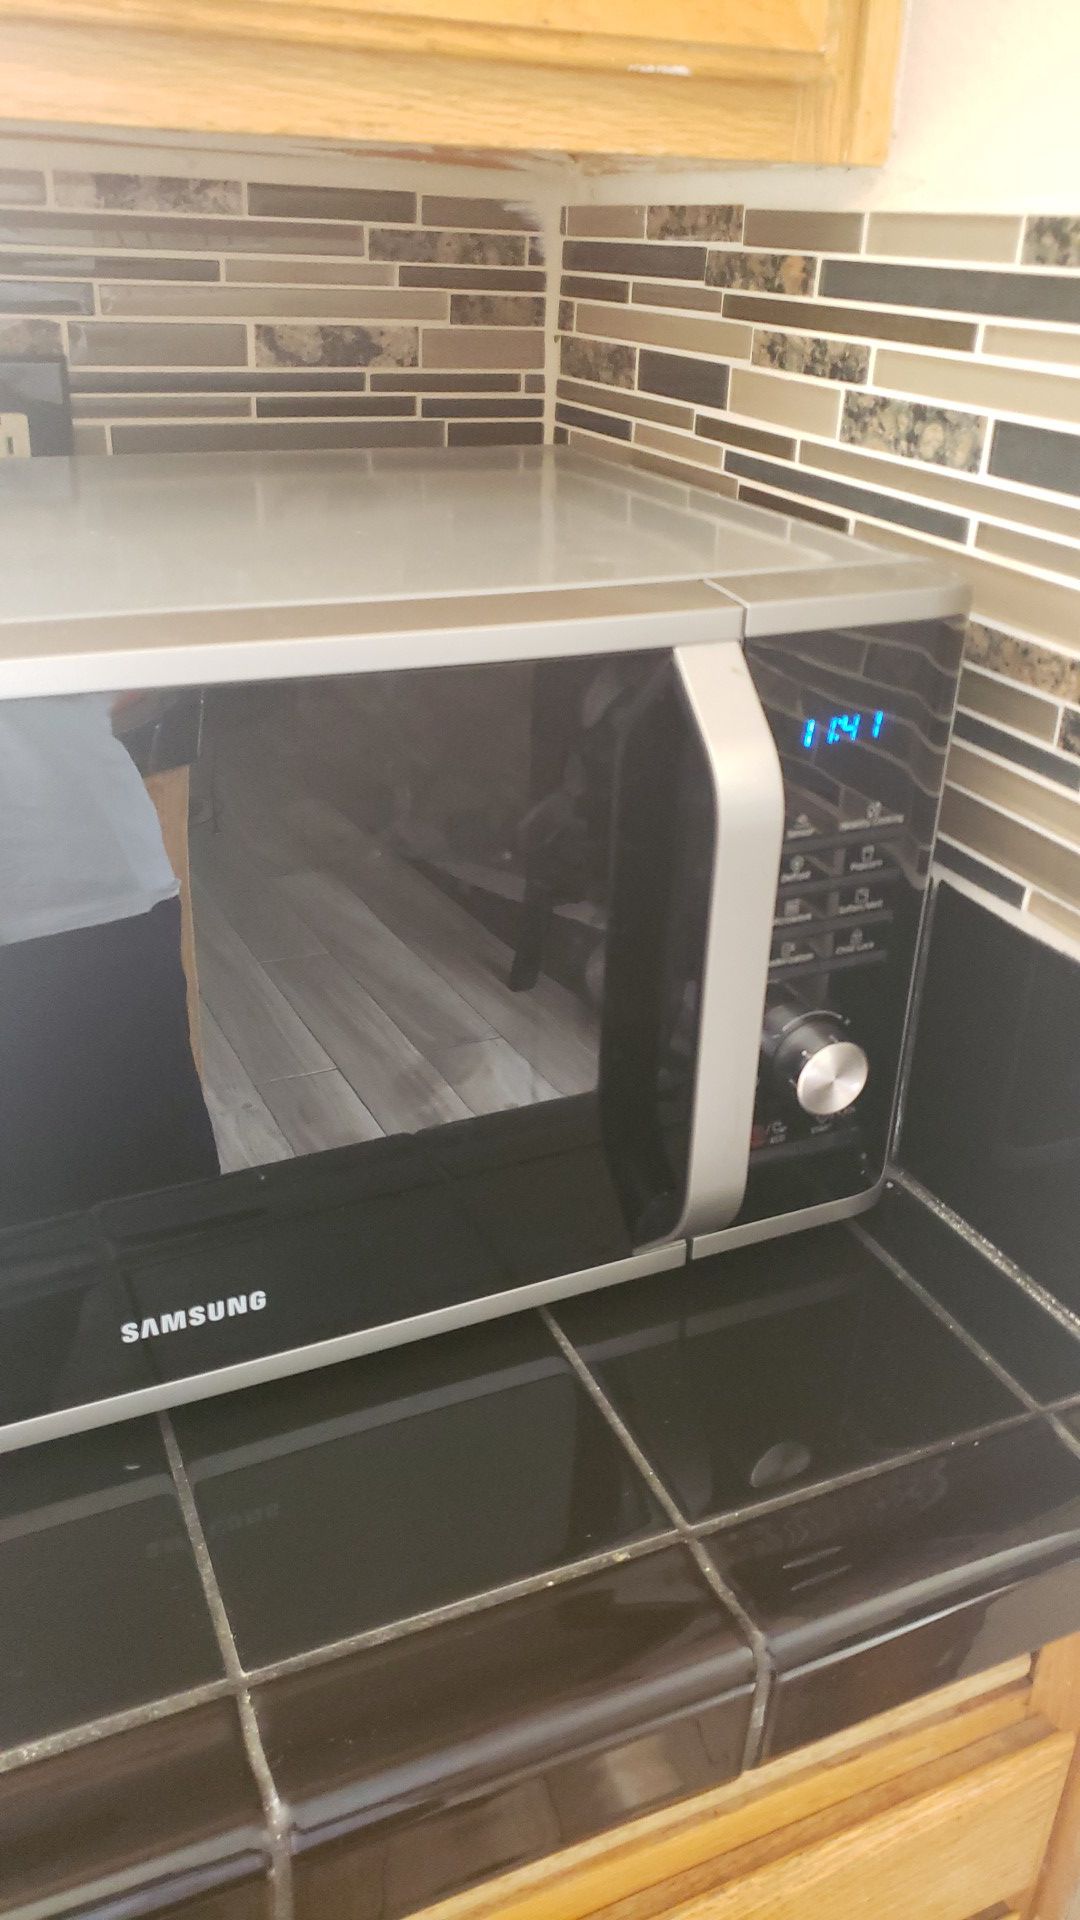 Samsung's microwave